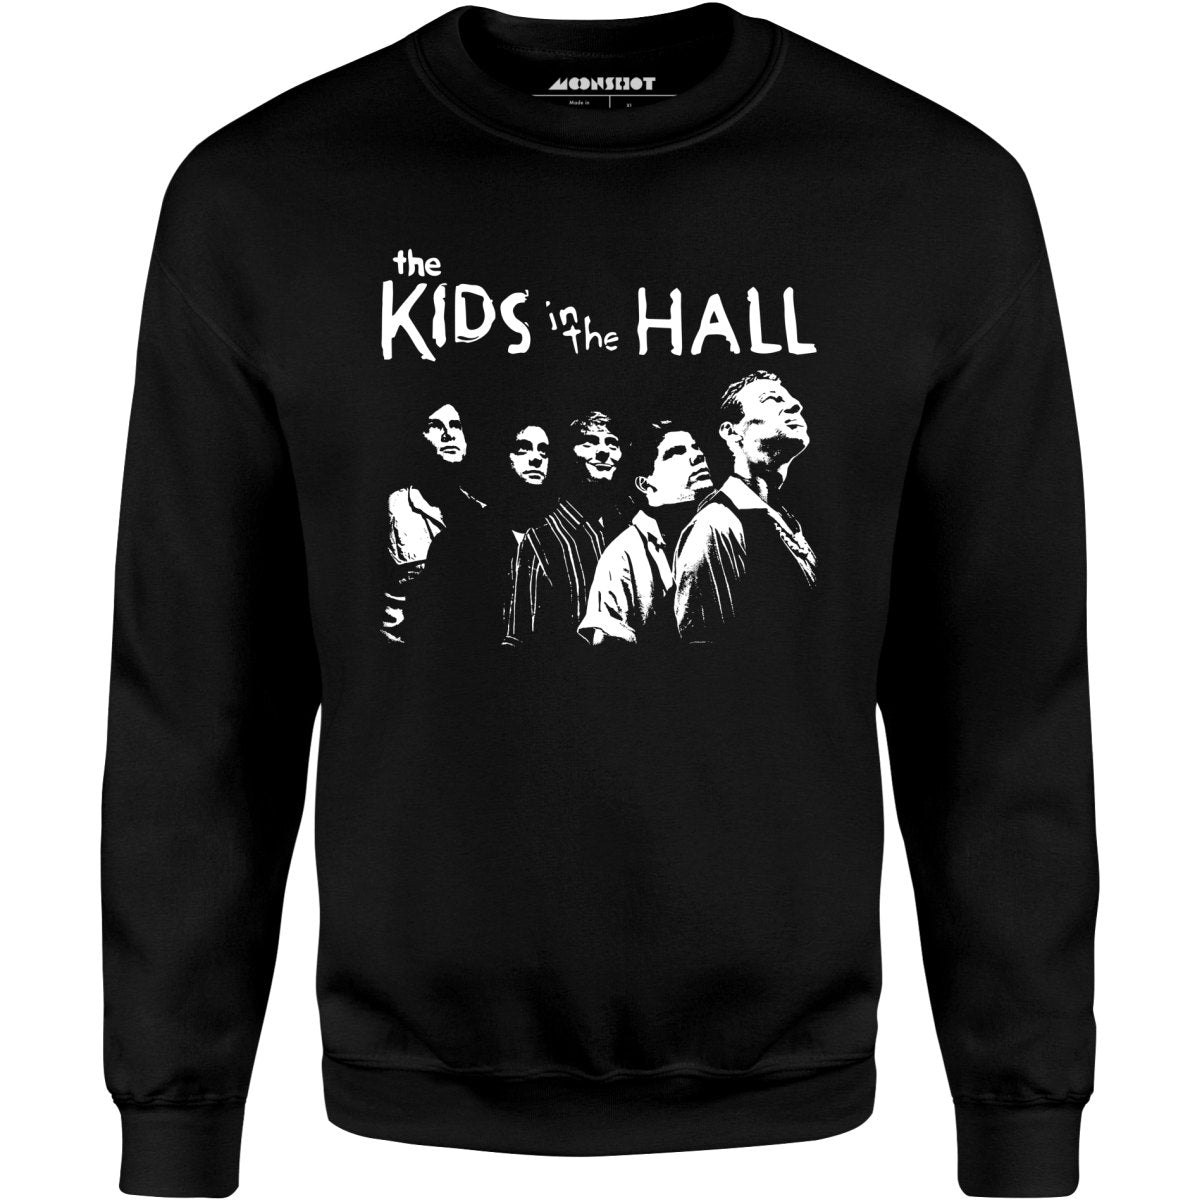 The Kids in The Hall - Unisex Sweatshirt